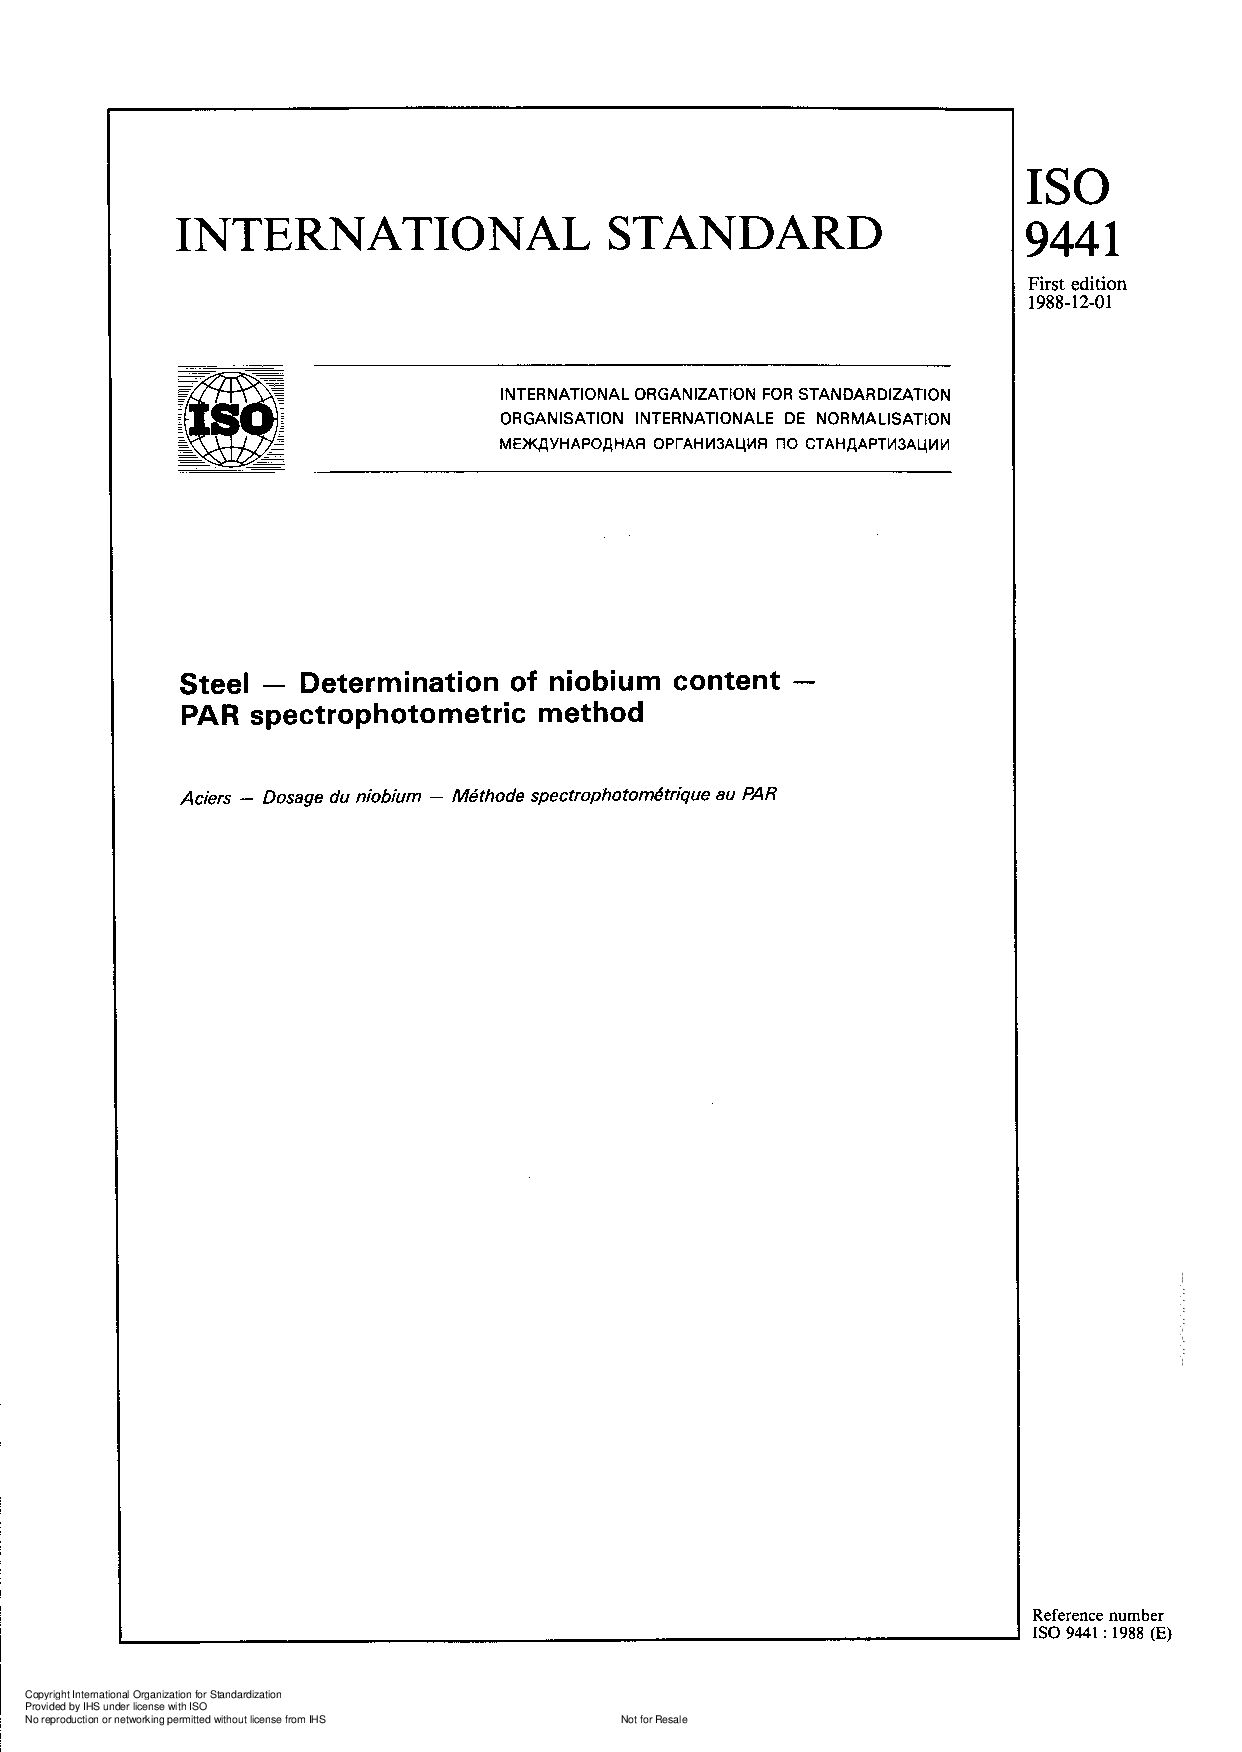 ISO 9441:1988封面图